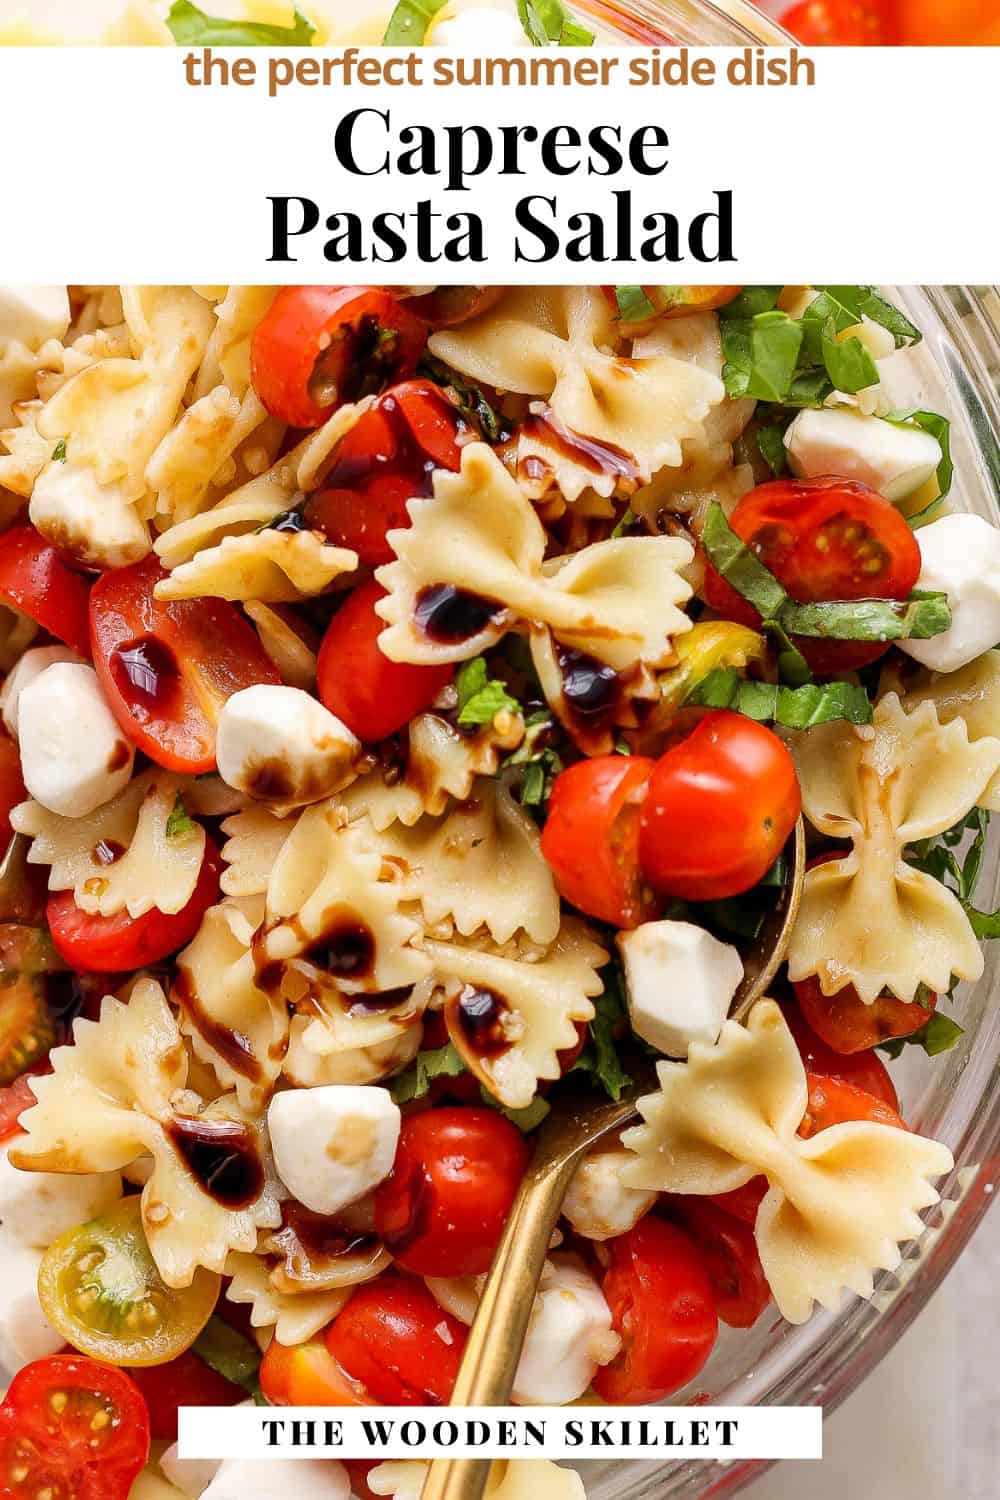 Pinterest image for a caprese pasta salad.